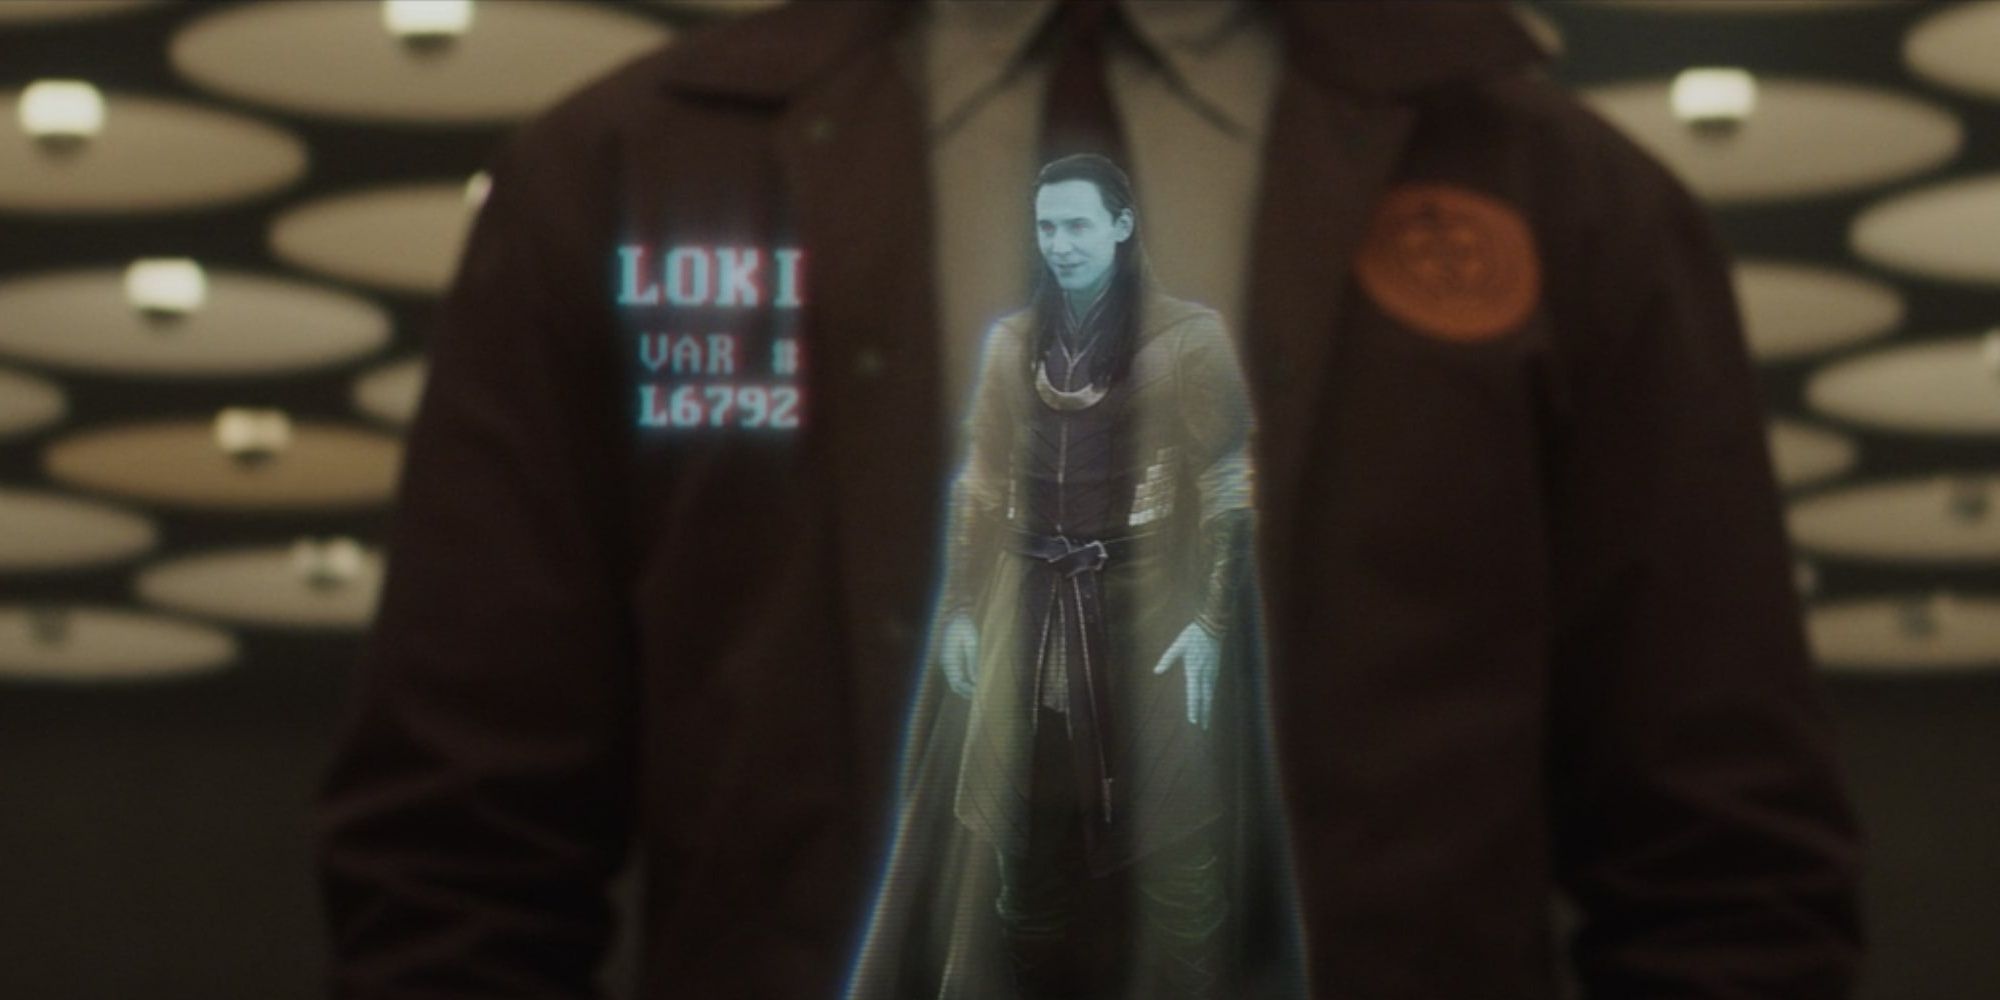 Loki Variants Ranked By How Loki They Are